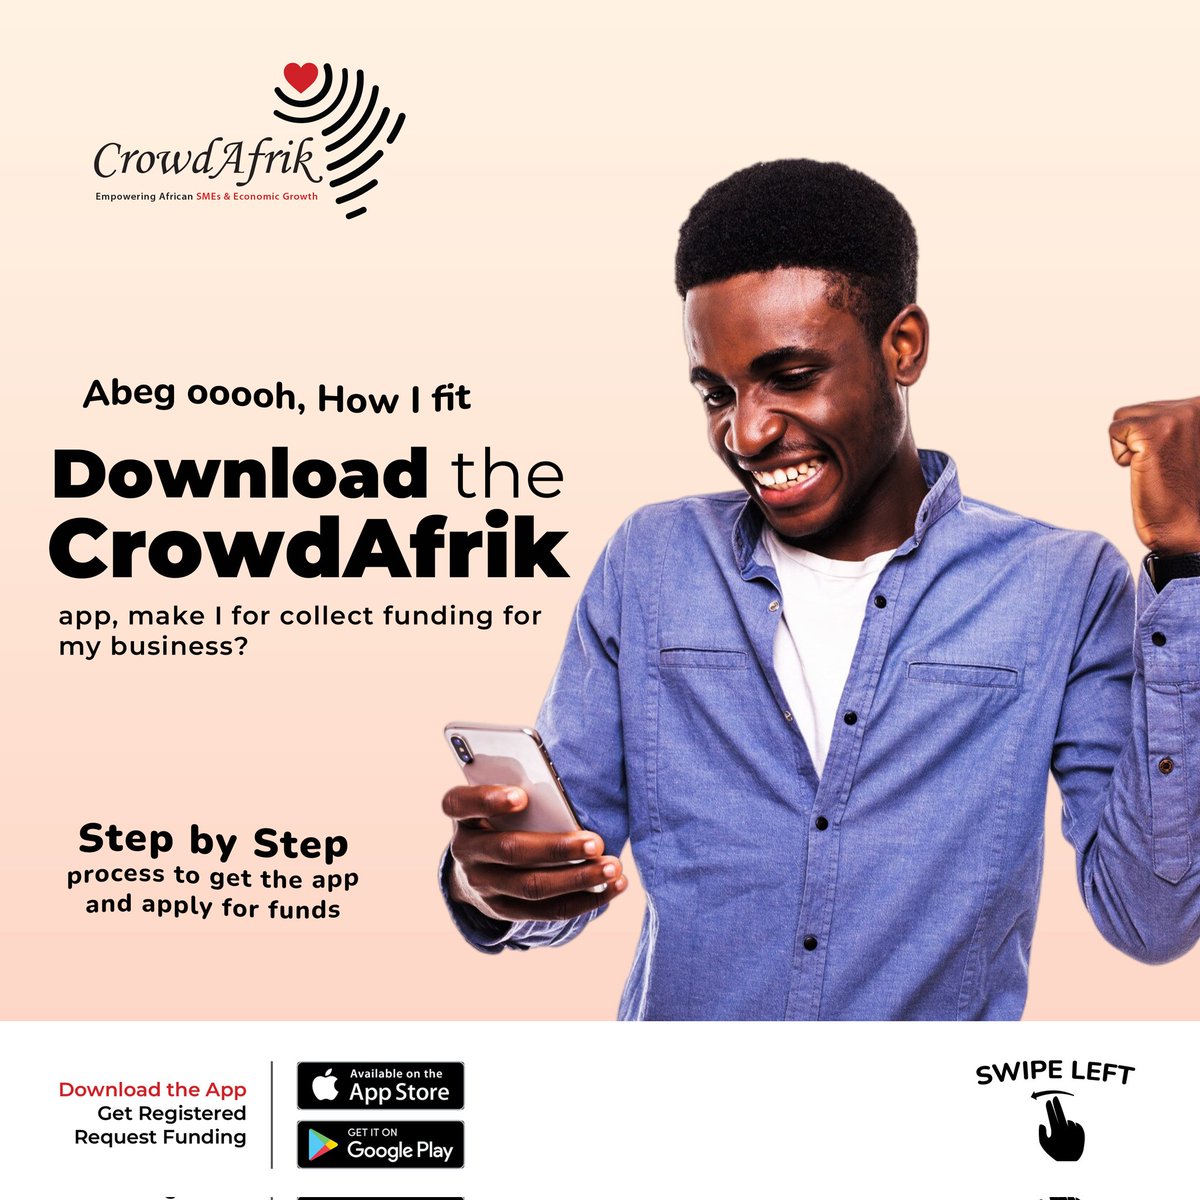 So what are you waiting for? crowdafrik.com to learn more and start your journey today! #CrowdAfrik #Entrepreneurship #StartupLife #FundingOpportunity #BusinessIdeas #EntrepreneurialJourney